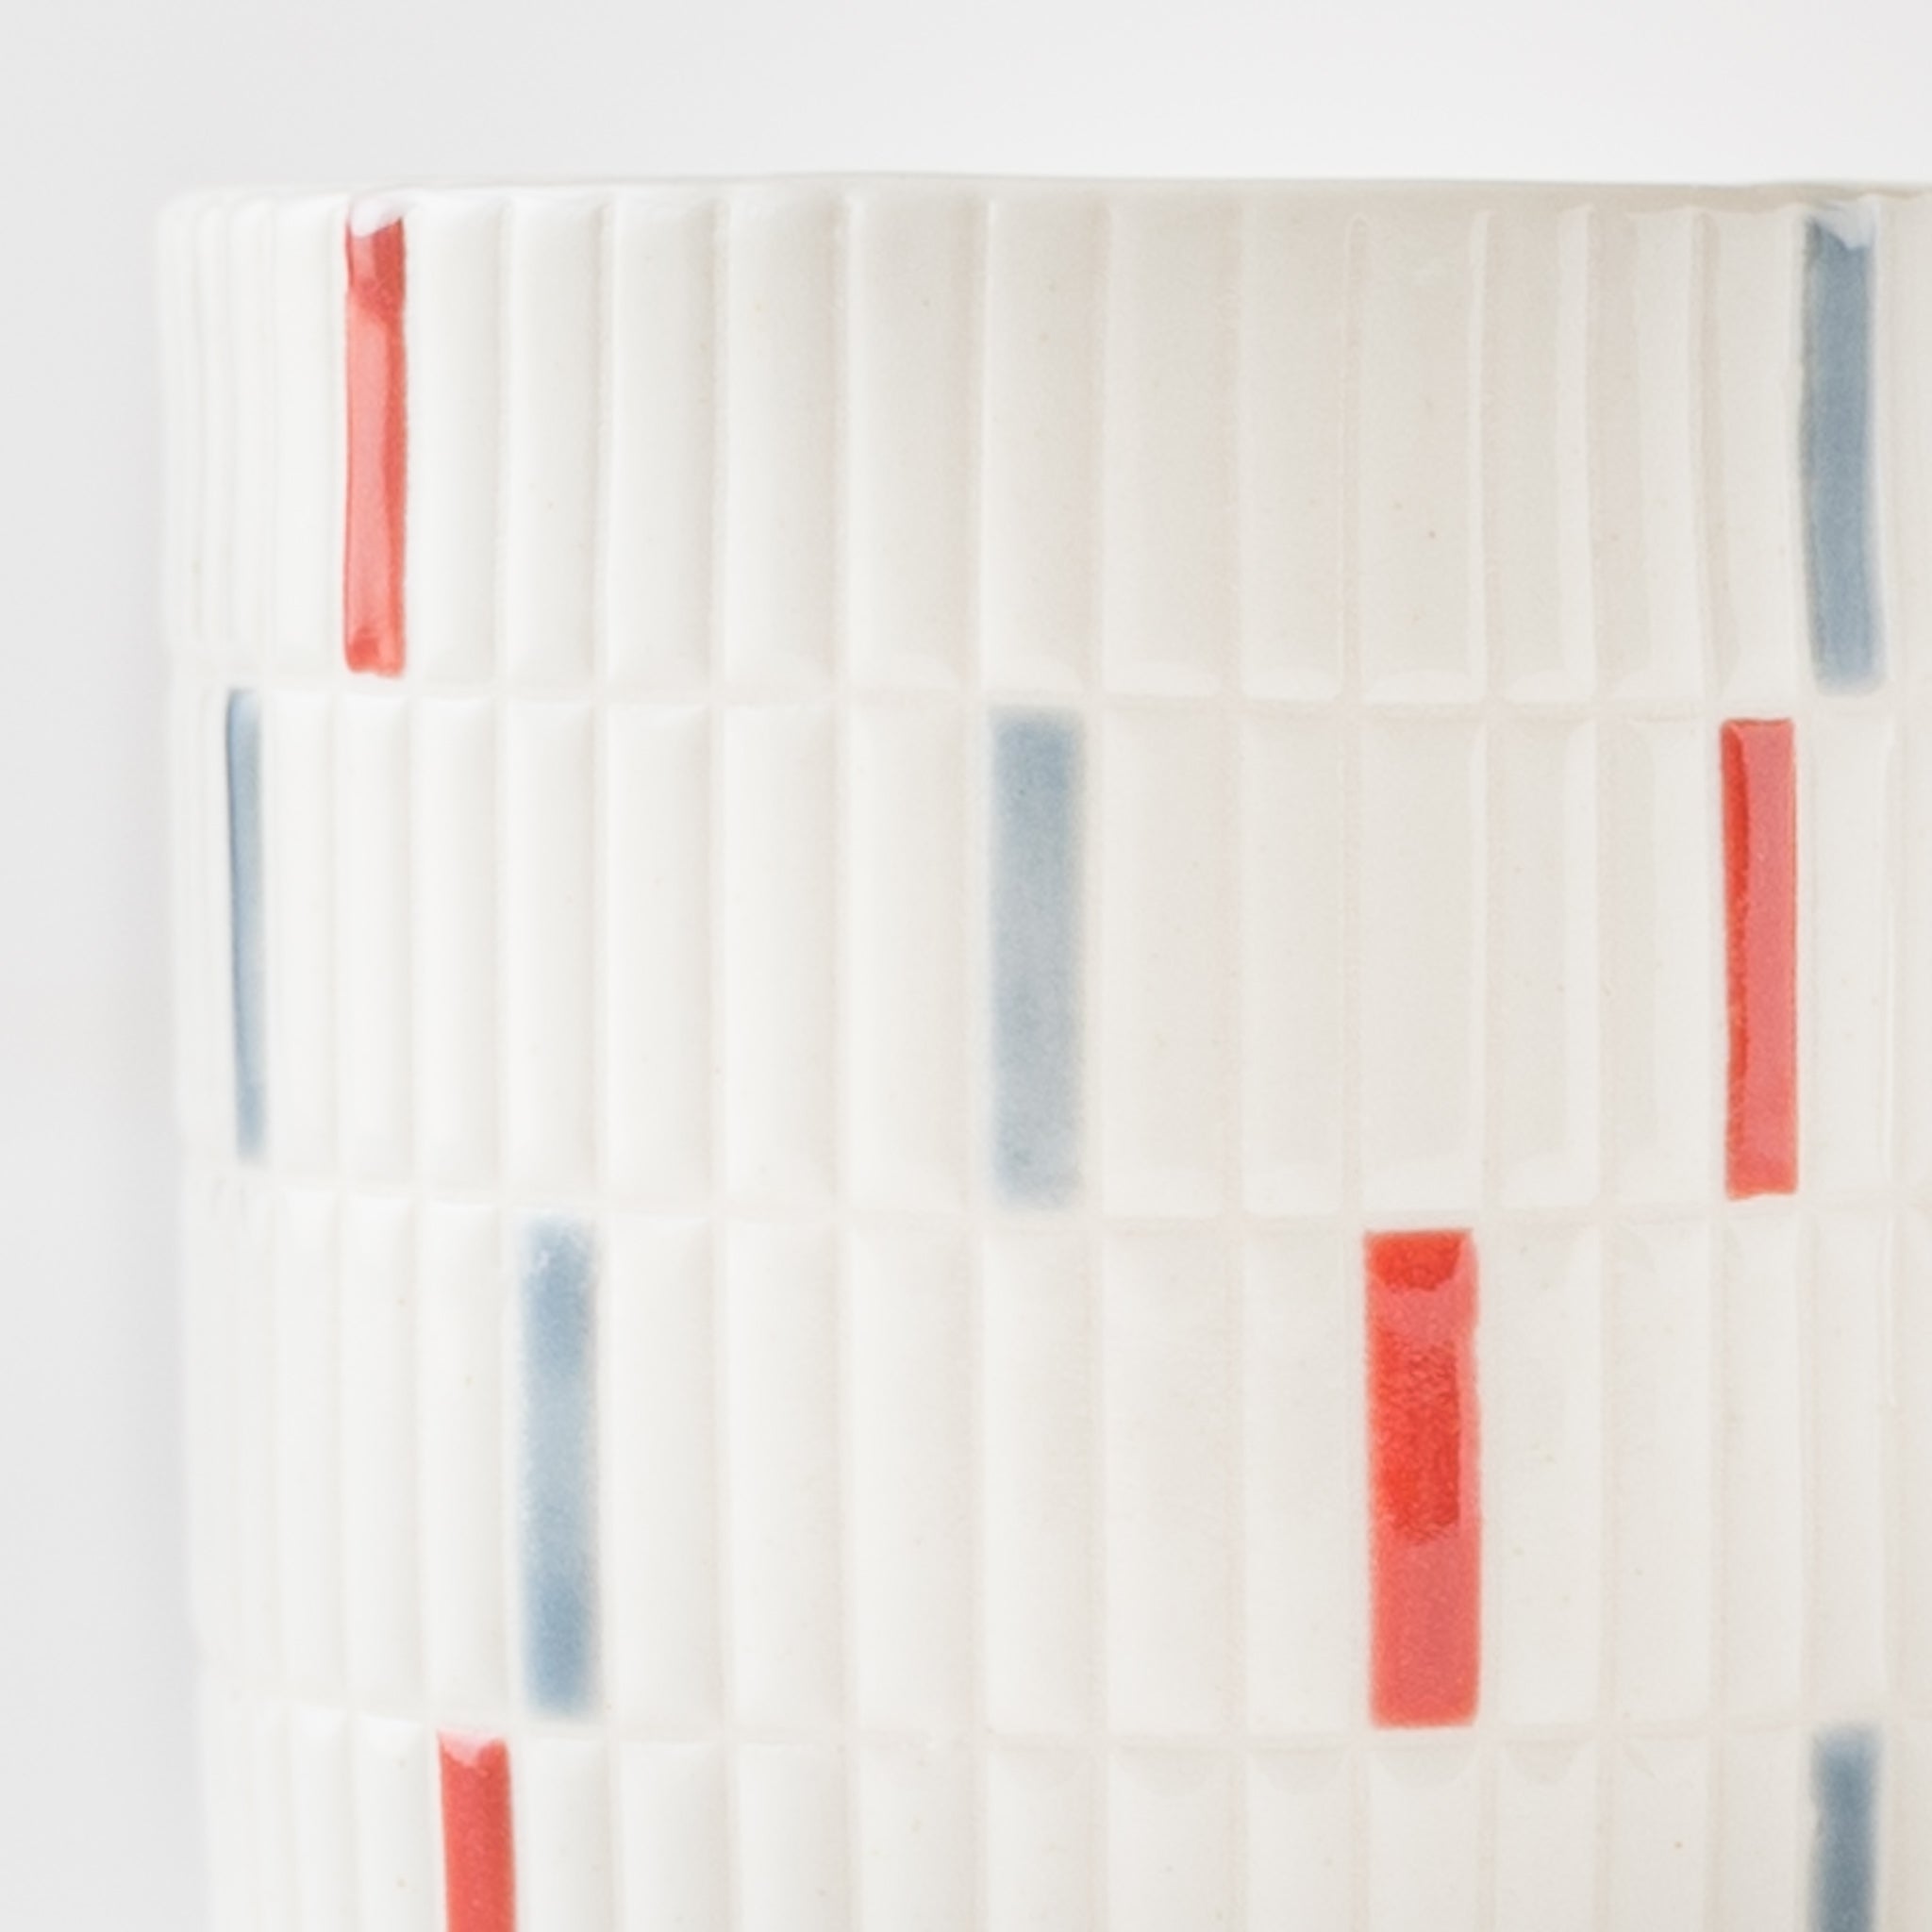 Yukari Nakagawa's Mug with Mosaic Tile Texture is Fashionable and Cute